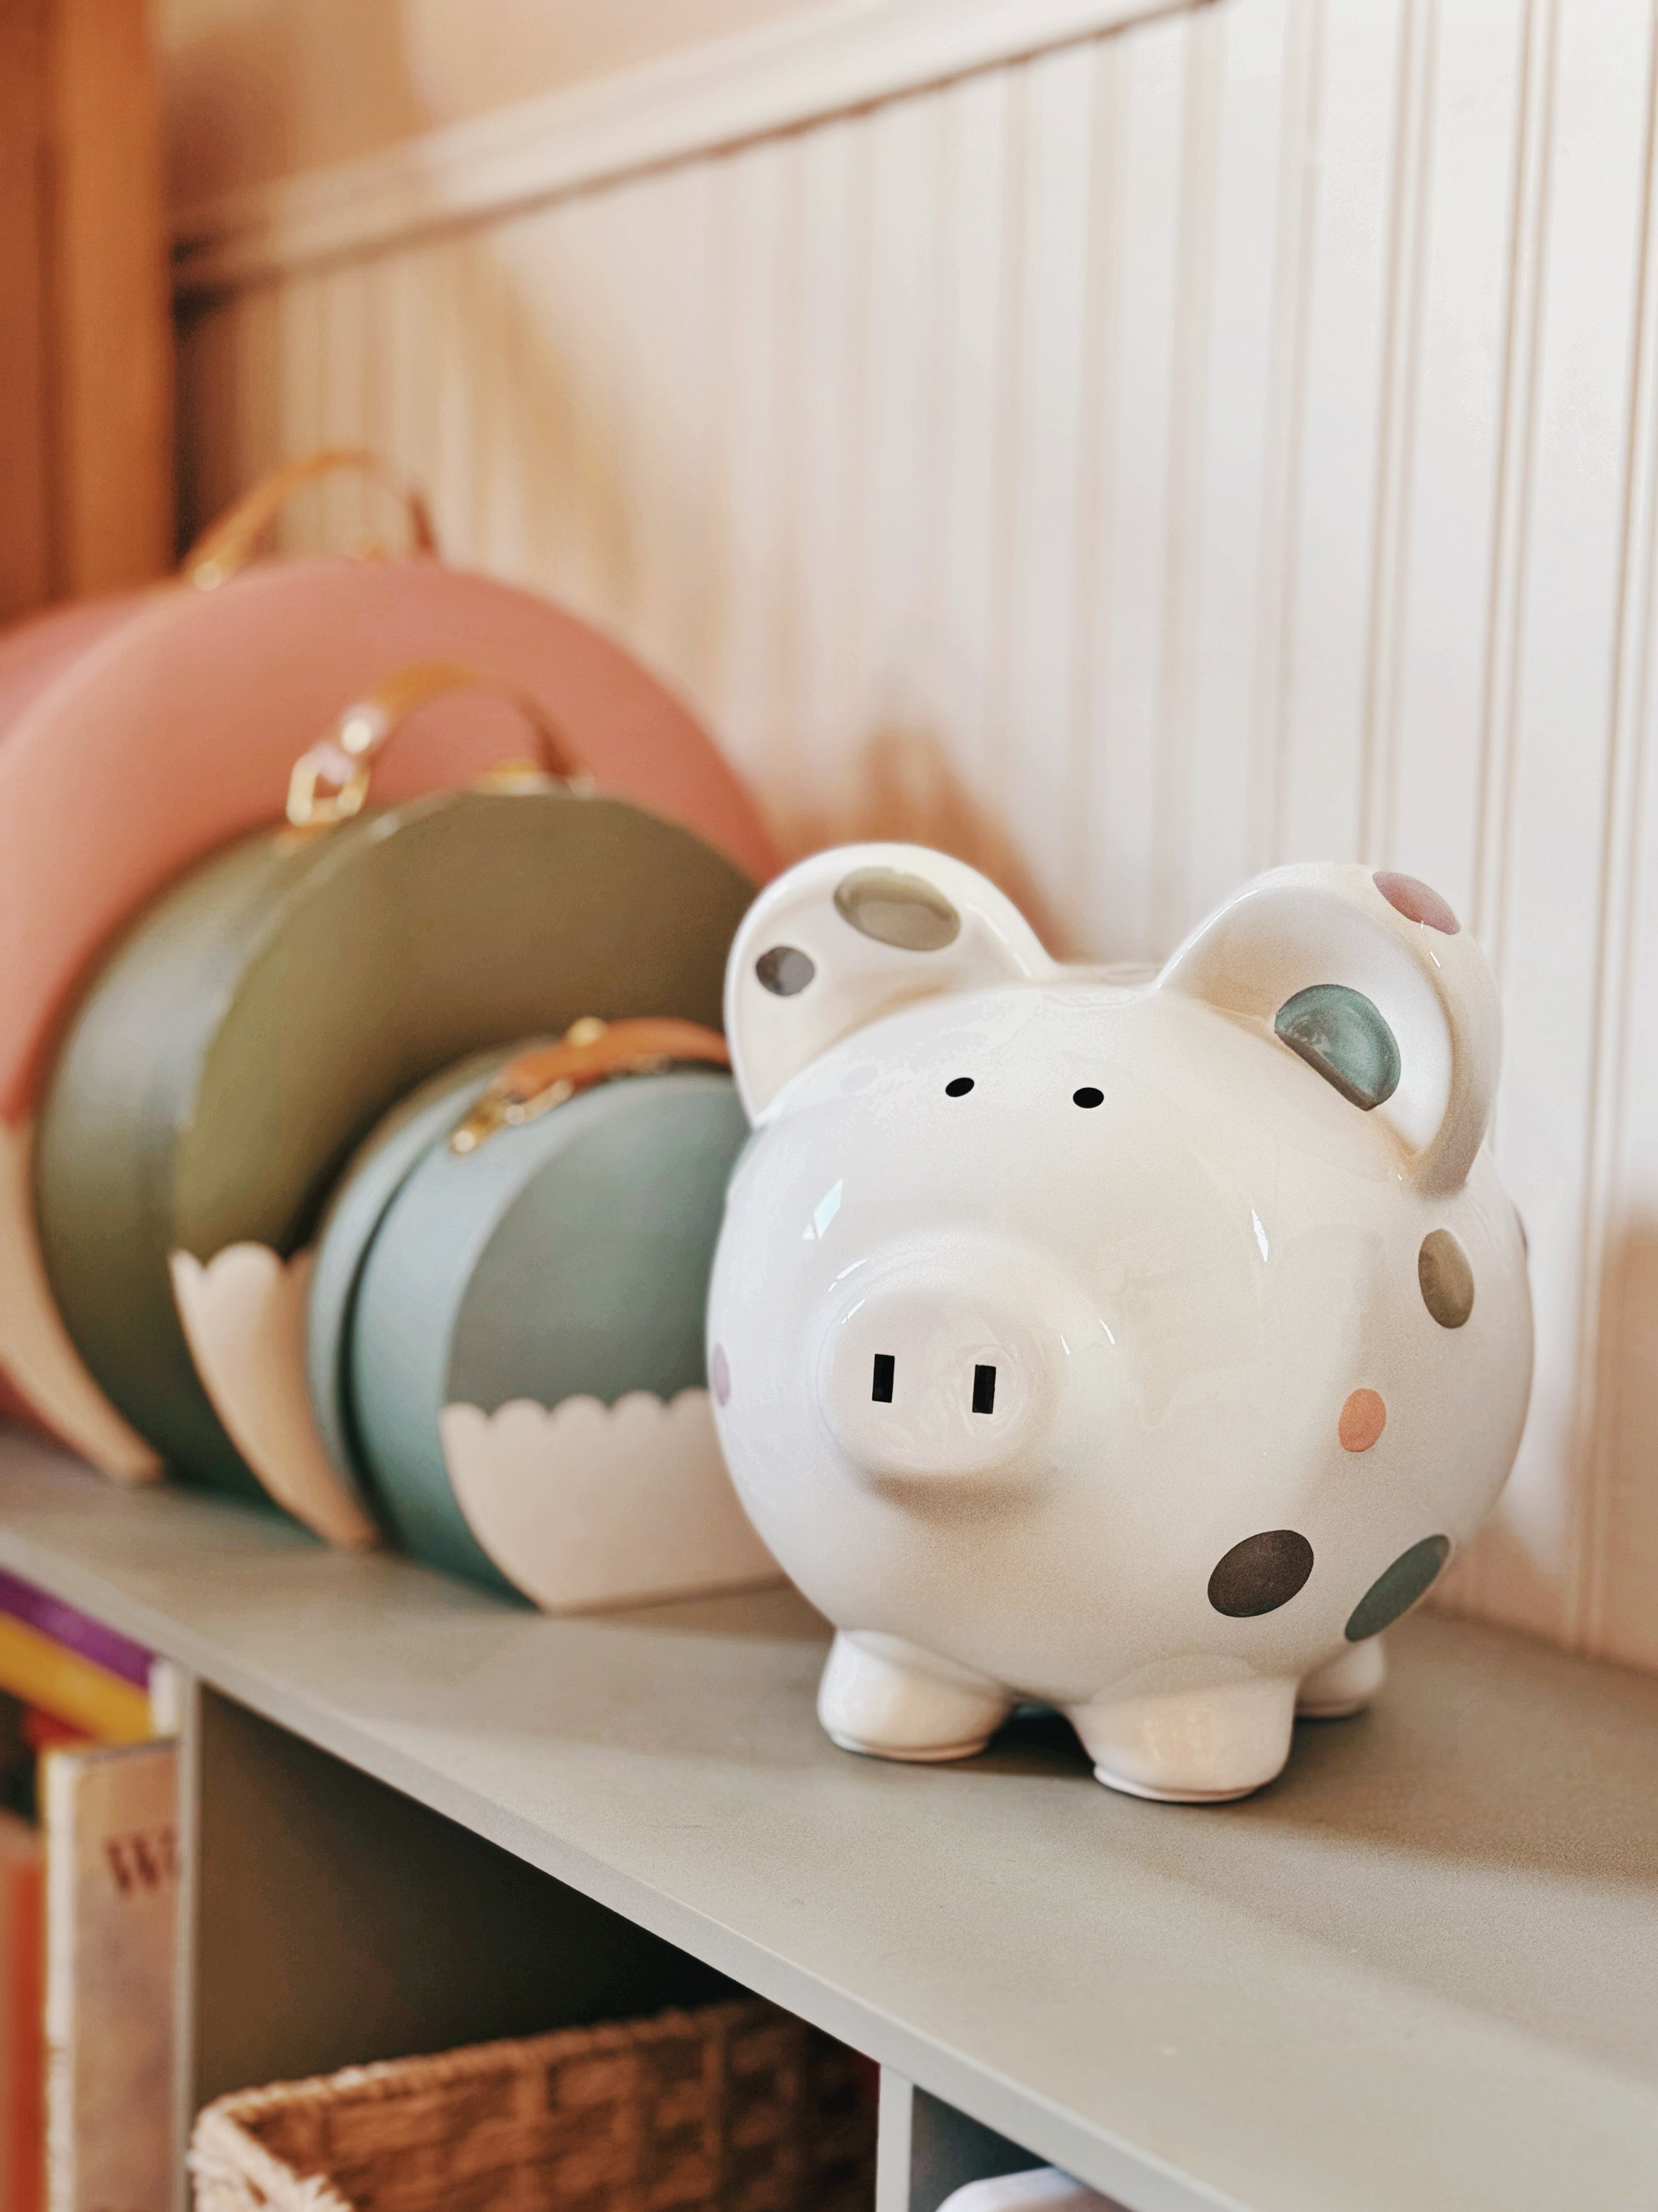 Pastel Multi-Dot Piggy Bank Child to Cherish 